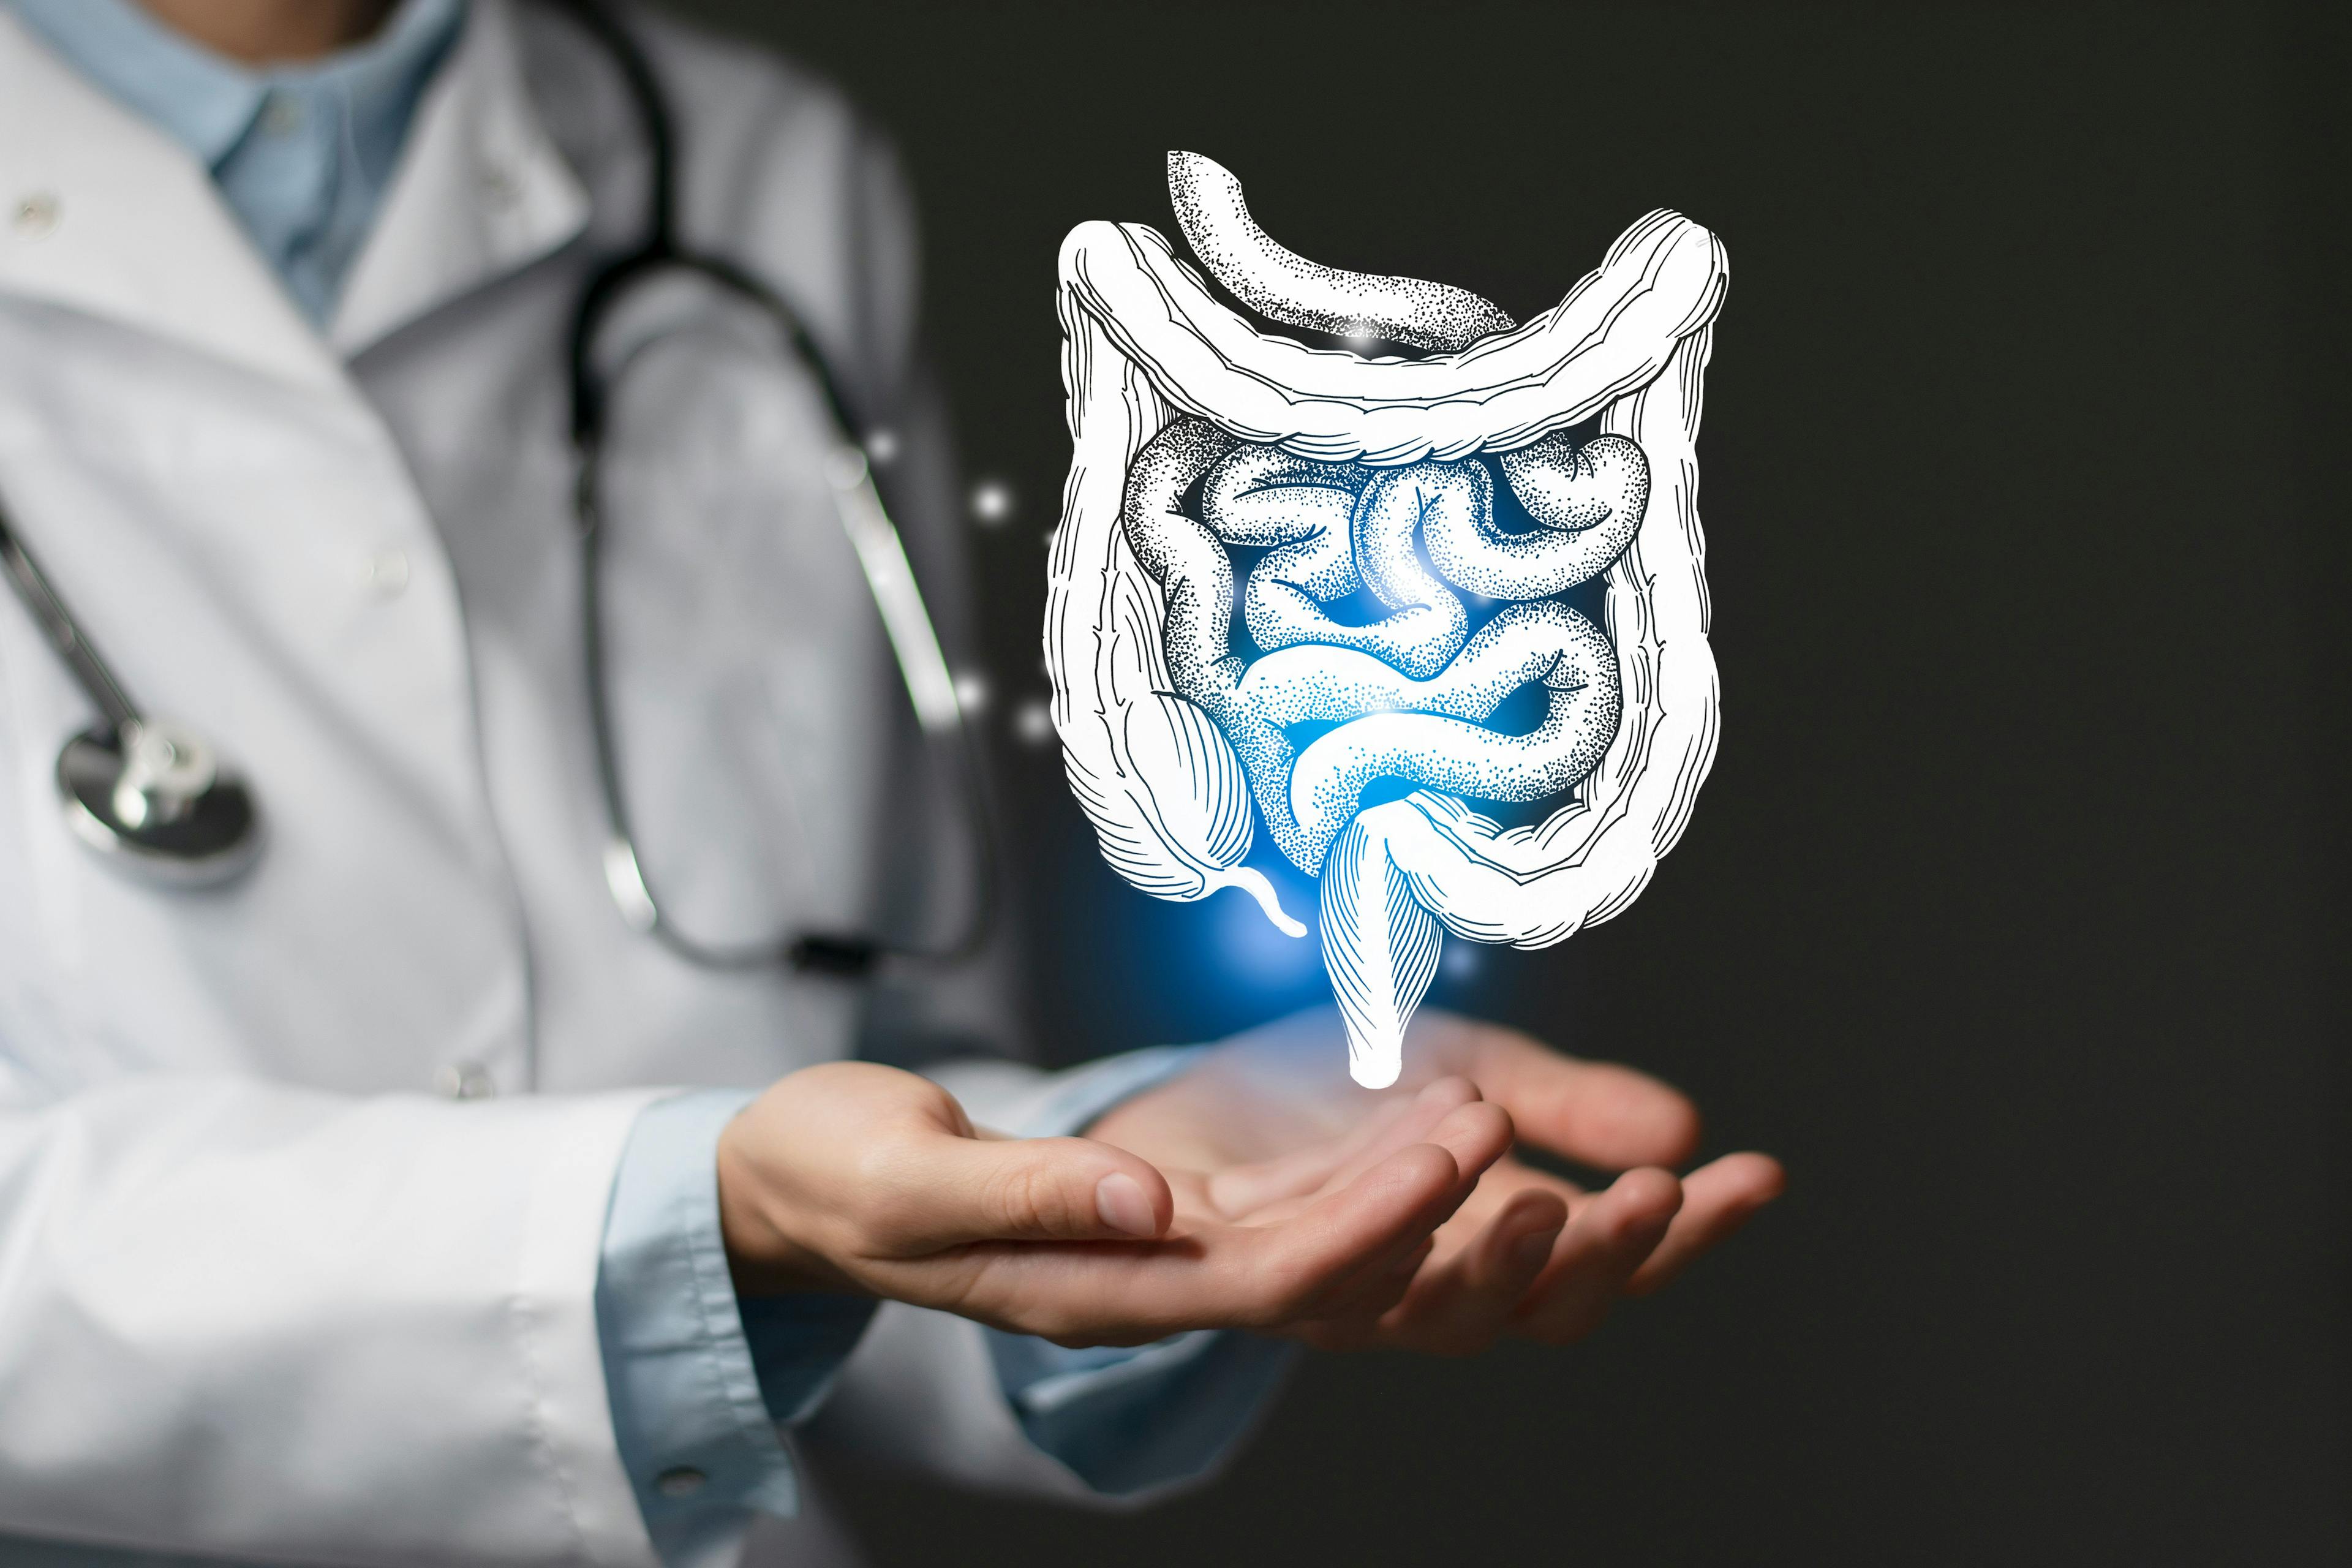 Doctor holding illustration of intestine | Image credit: mi_viri - stock.adobe.com